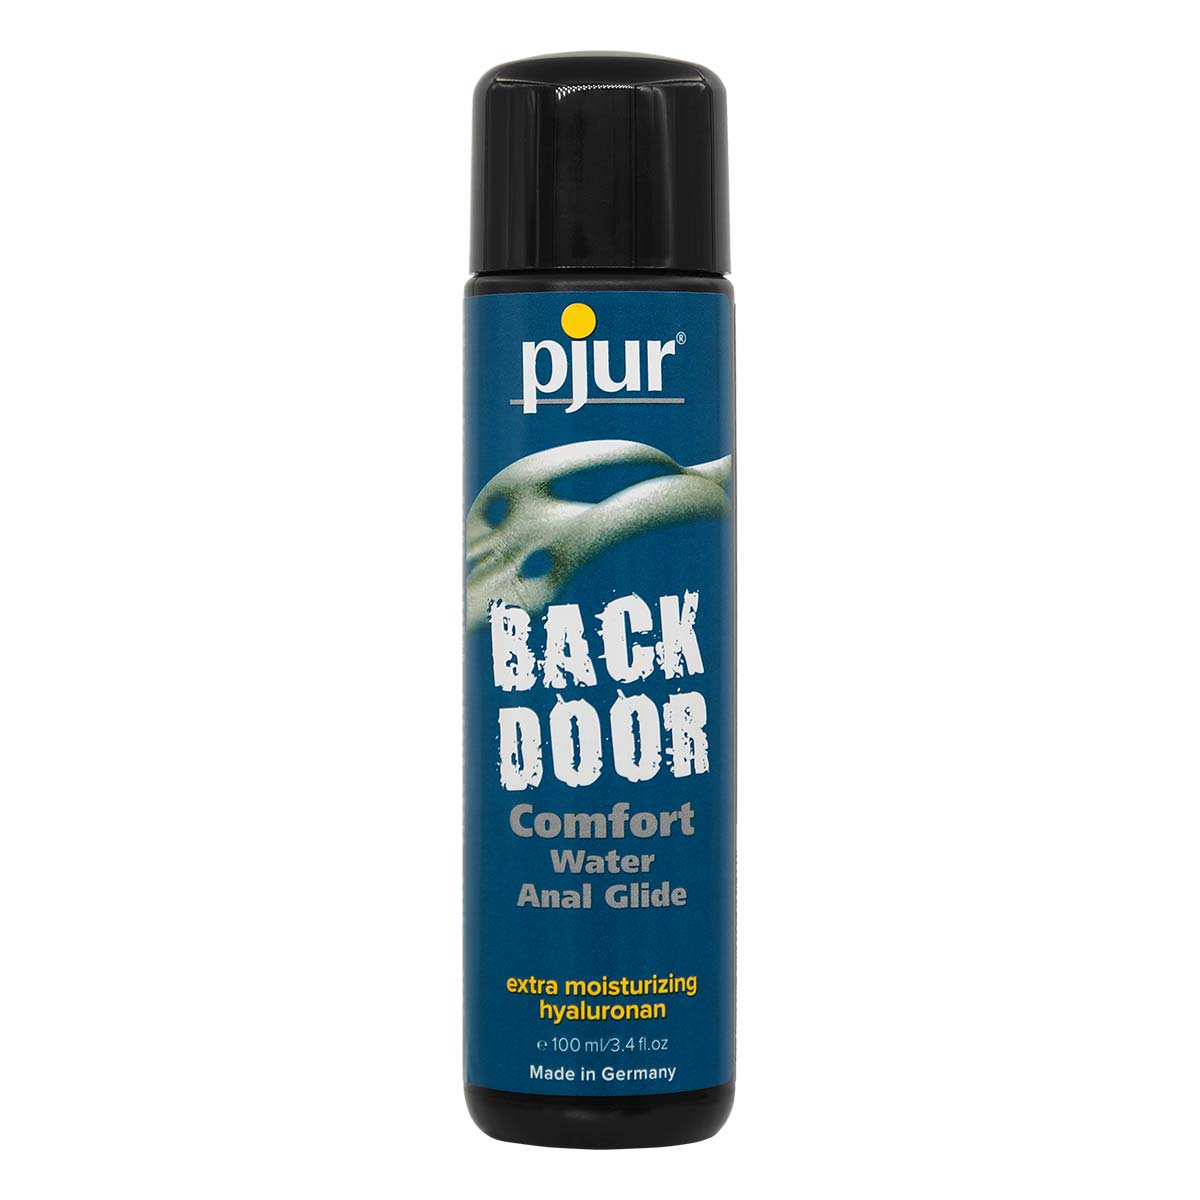 pjur BACK DOOR COMFORT 舒適肛交專用 100ml 水性潤滑液-p_2